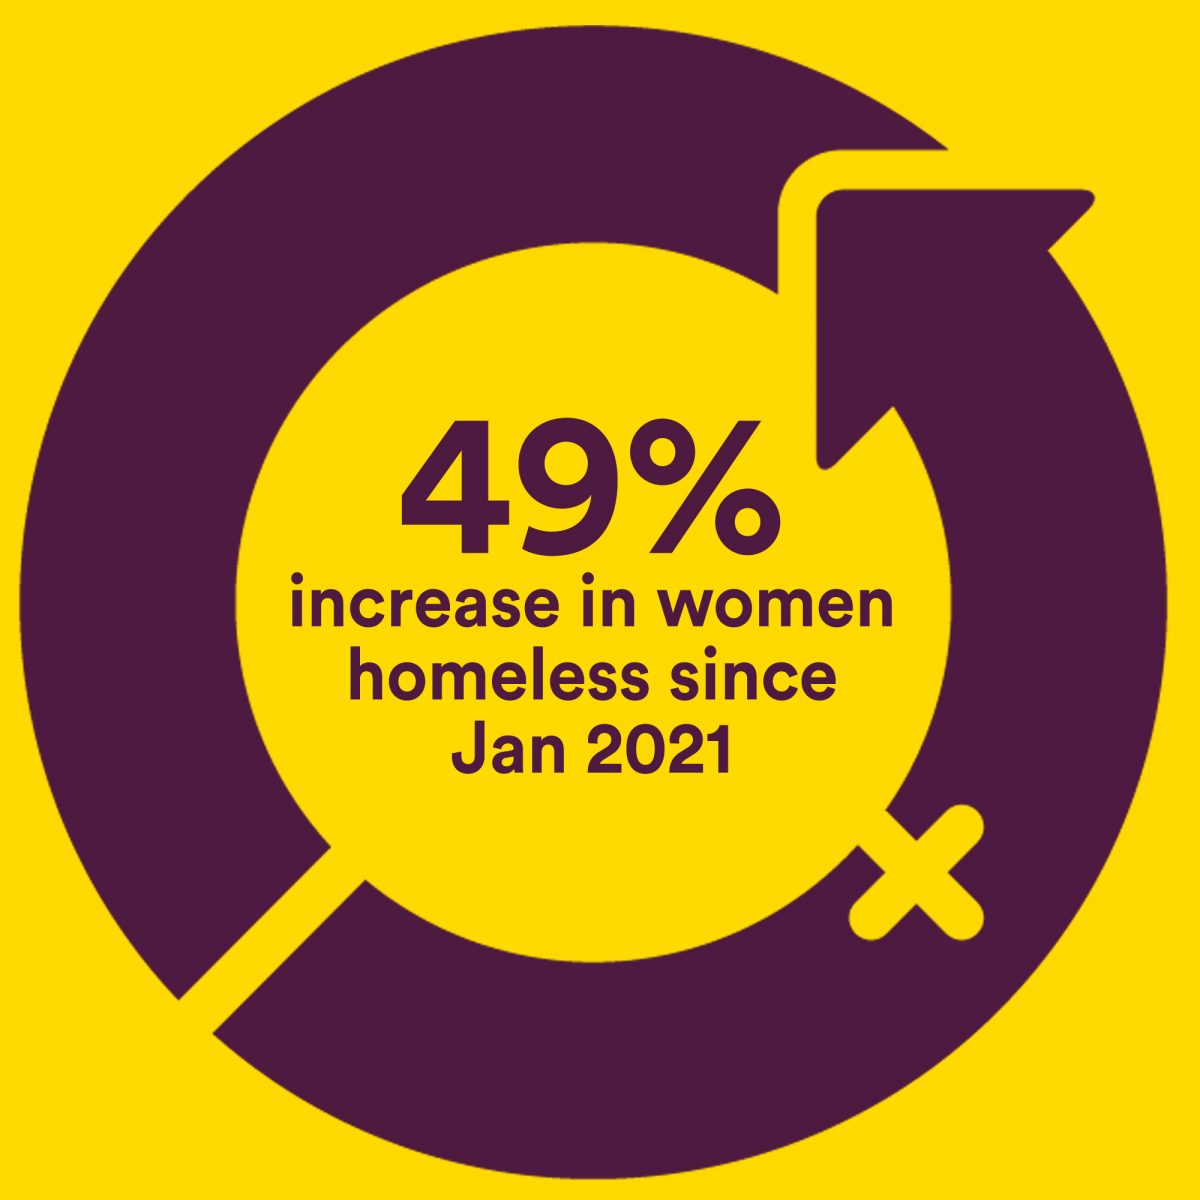 Shining a spotlight on women's homelessness. 49% increase in women homeless since January 2021.